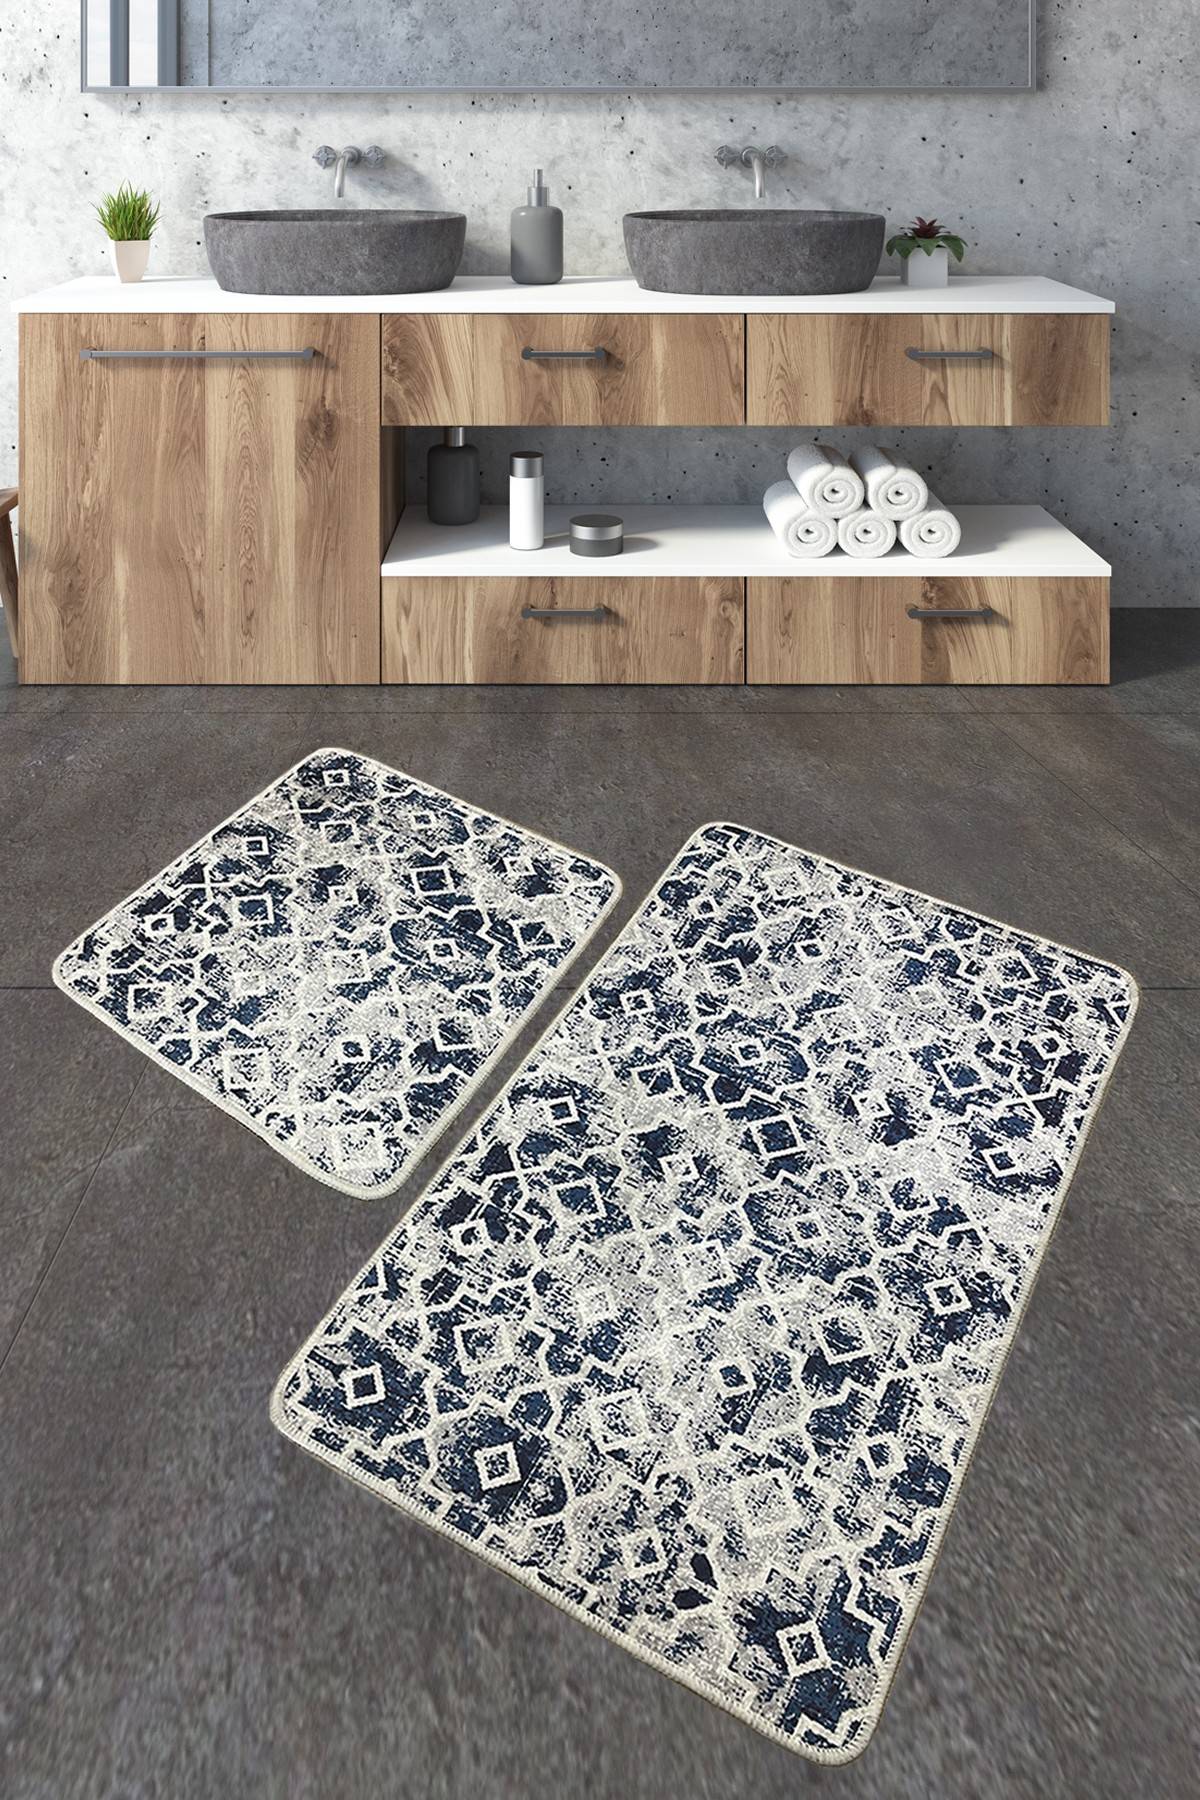 Set de tapis de salle de bain Siadari Motif Arabesque Vieilli Blanc et Noir